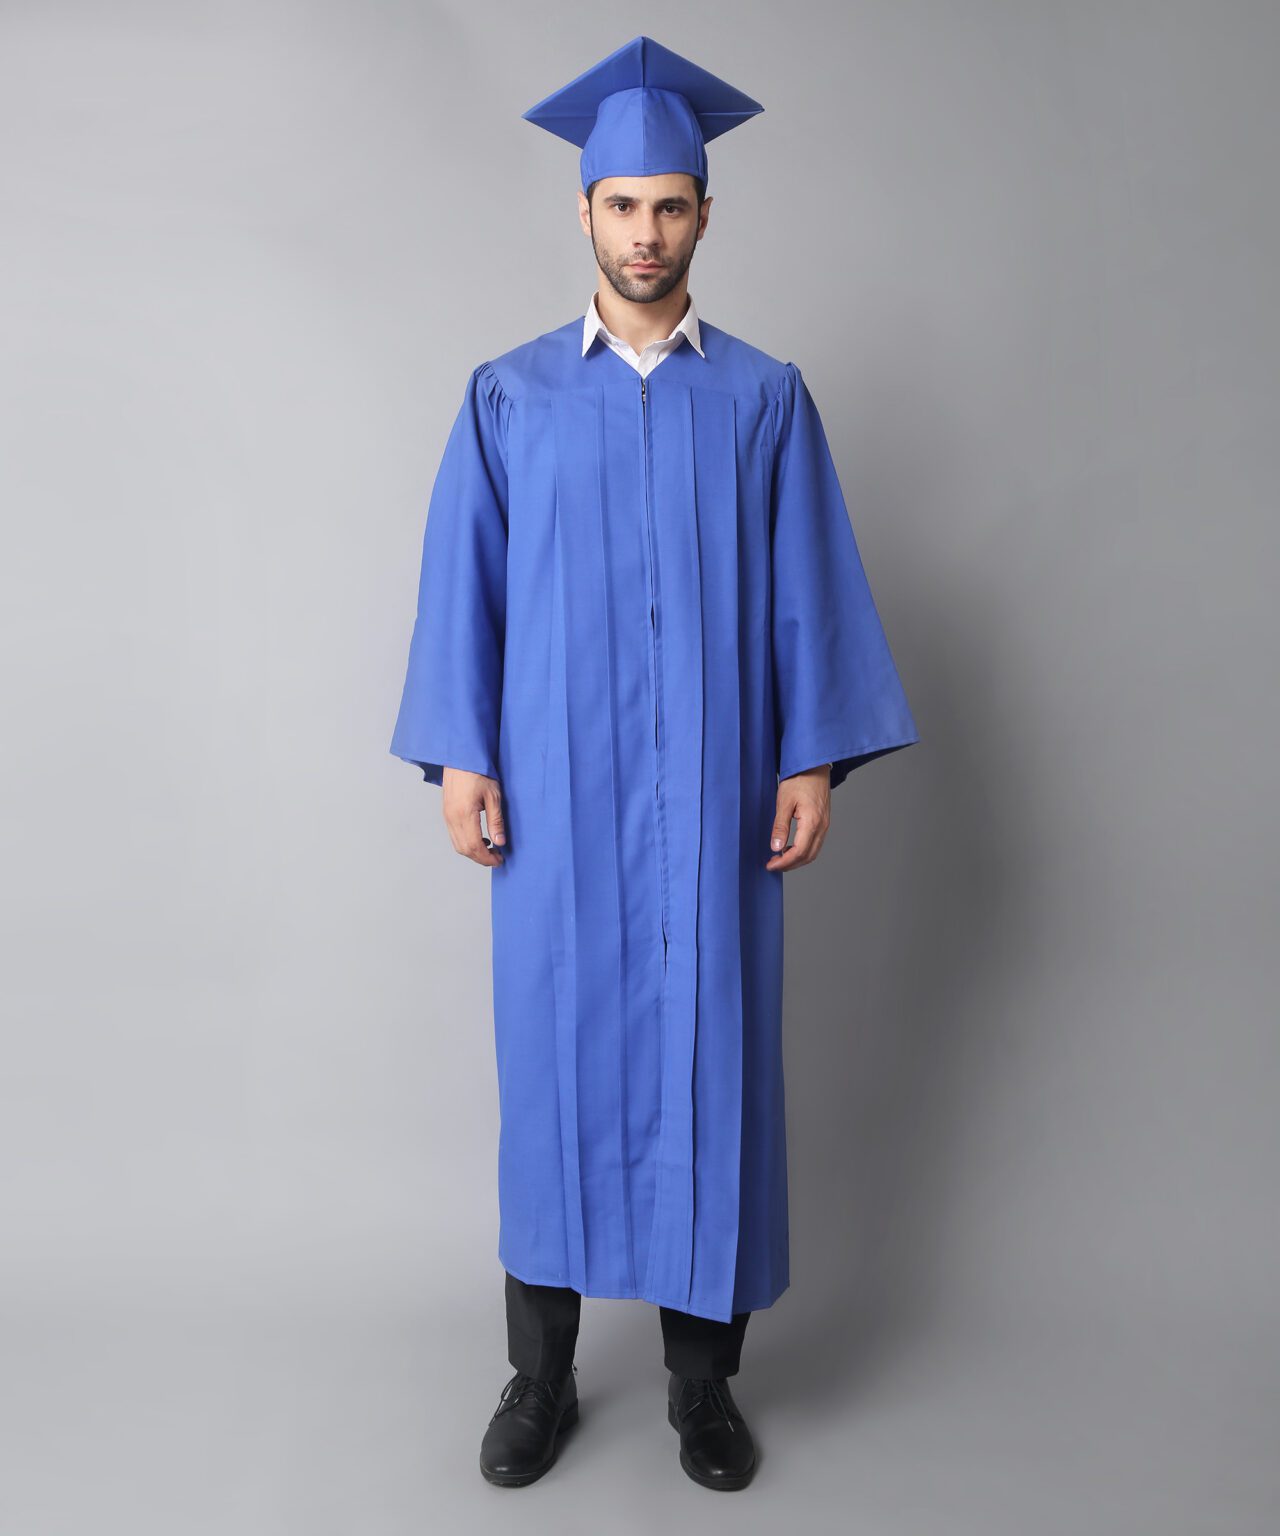 Shiny Light Blue Graduation Cap | Cap and Gown Direct